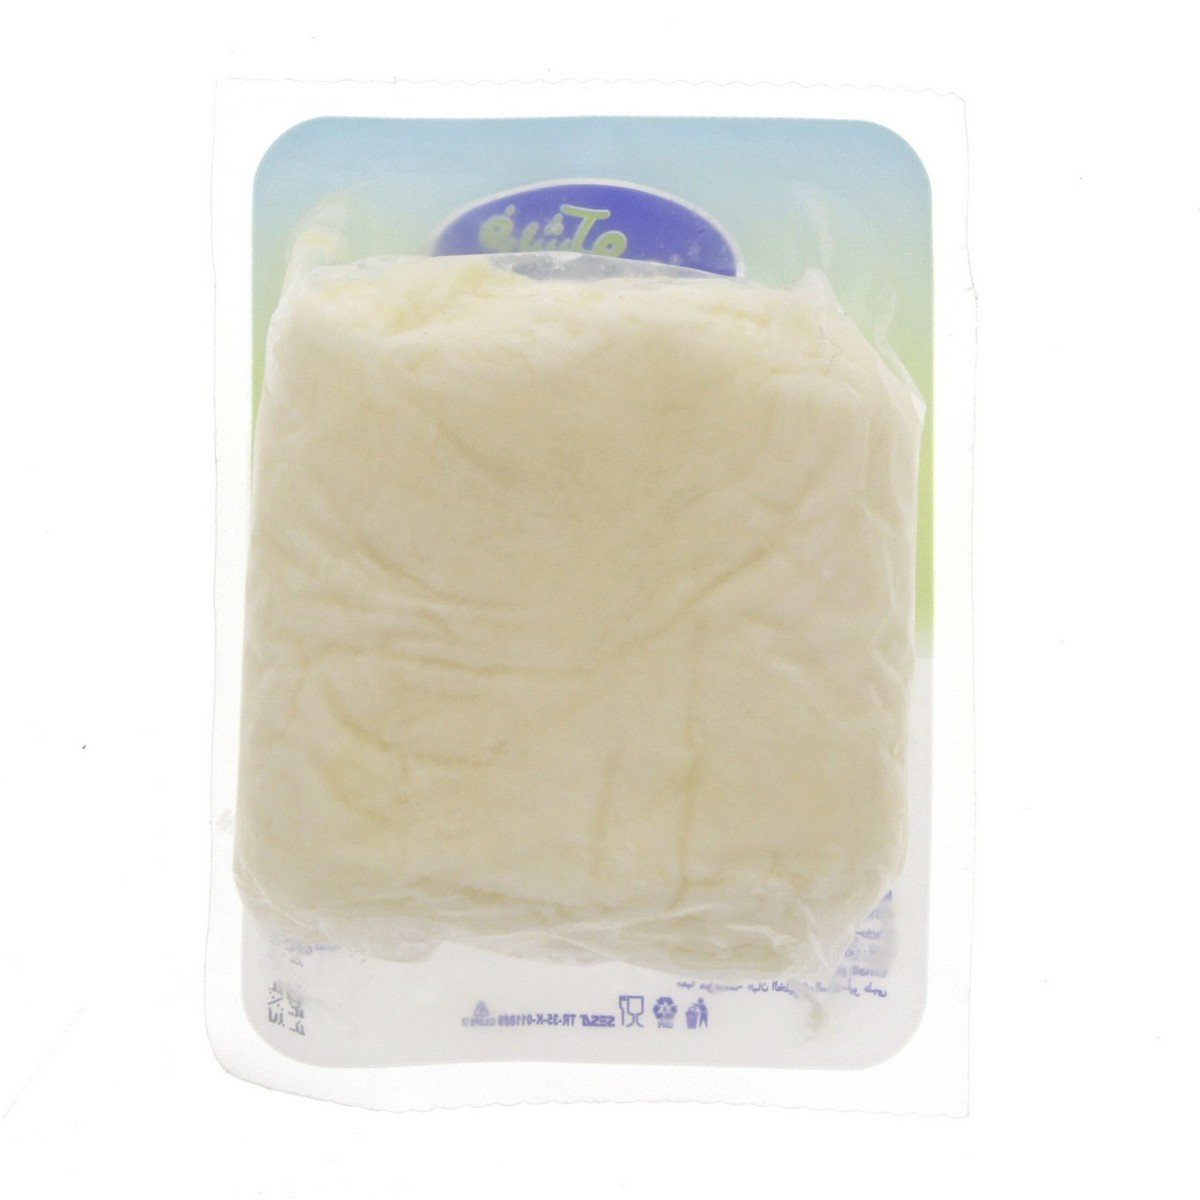 Freshco Halloumi Cyprus Cheese 230 g